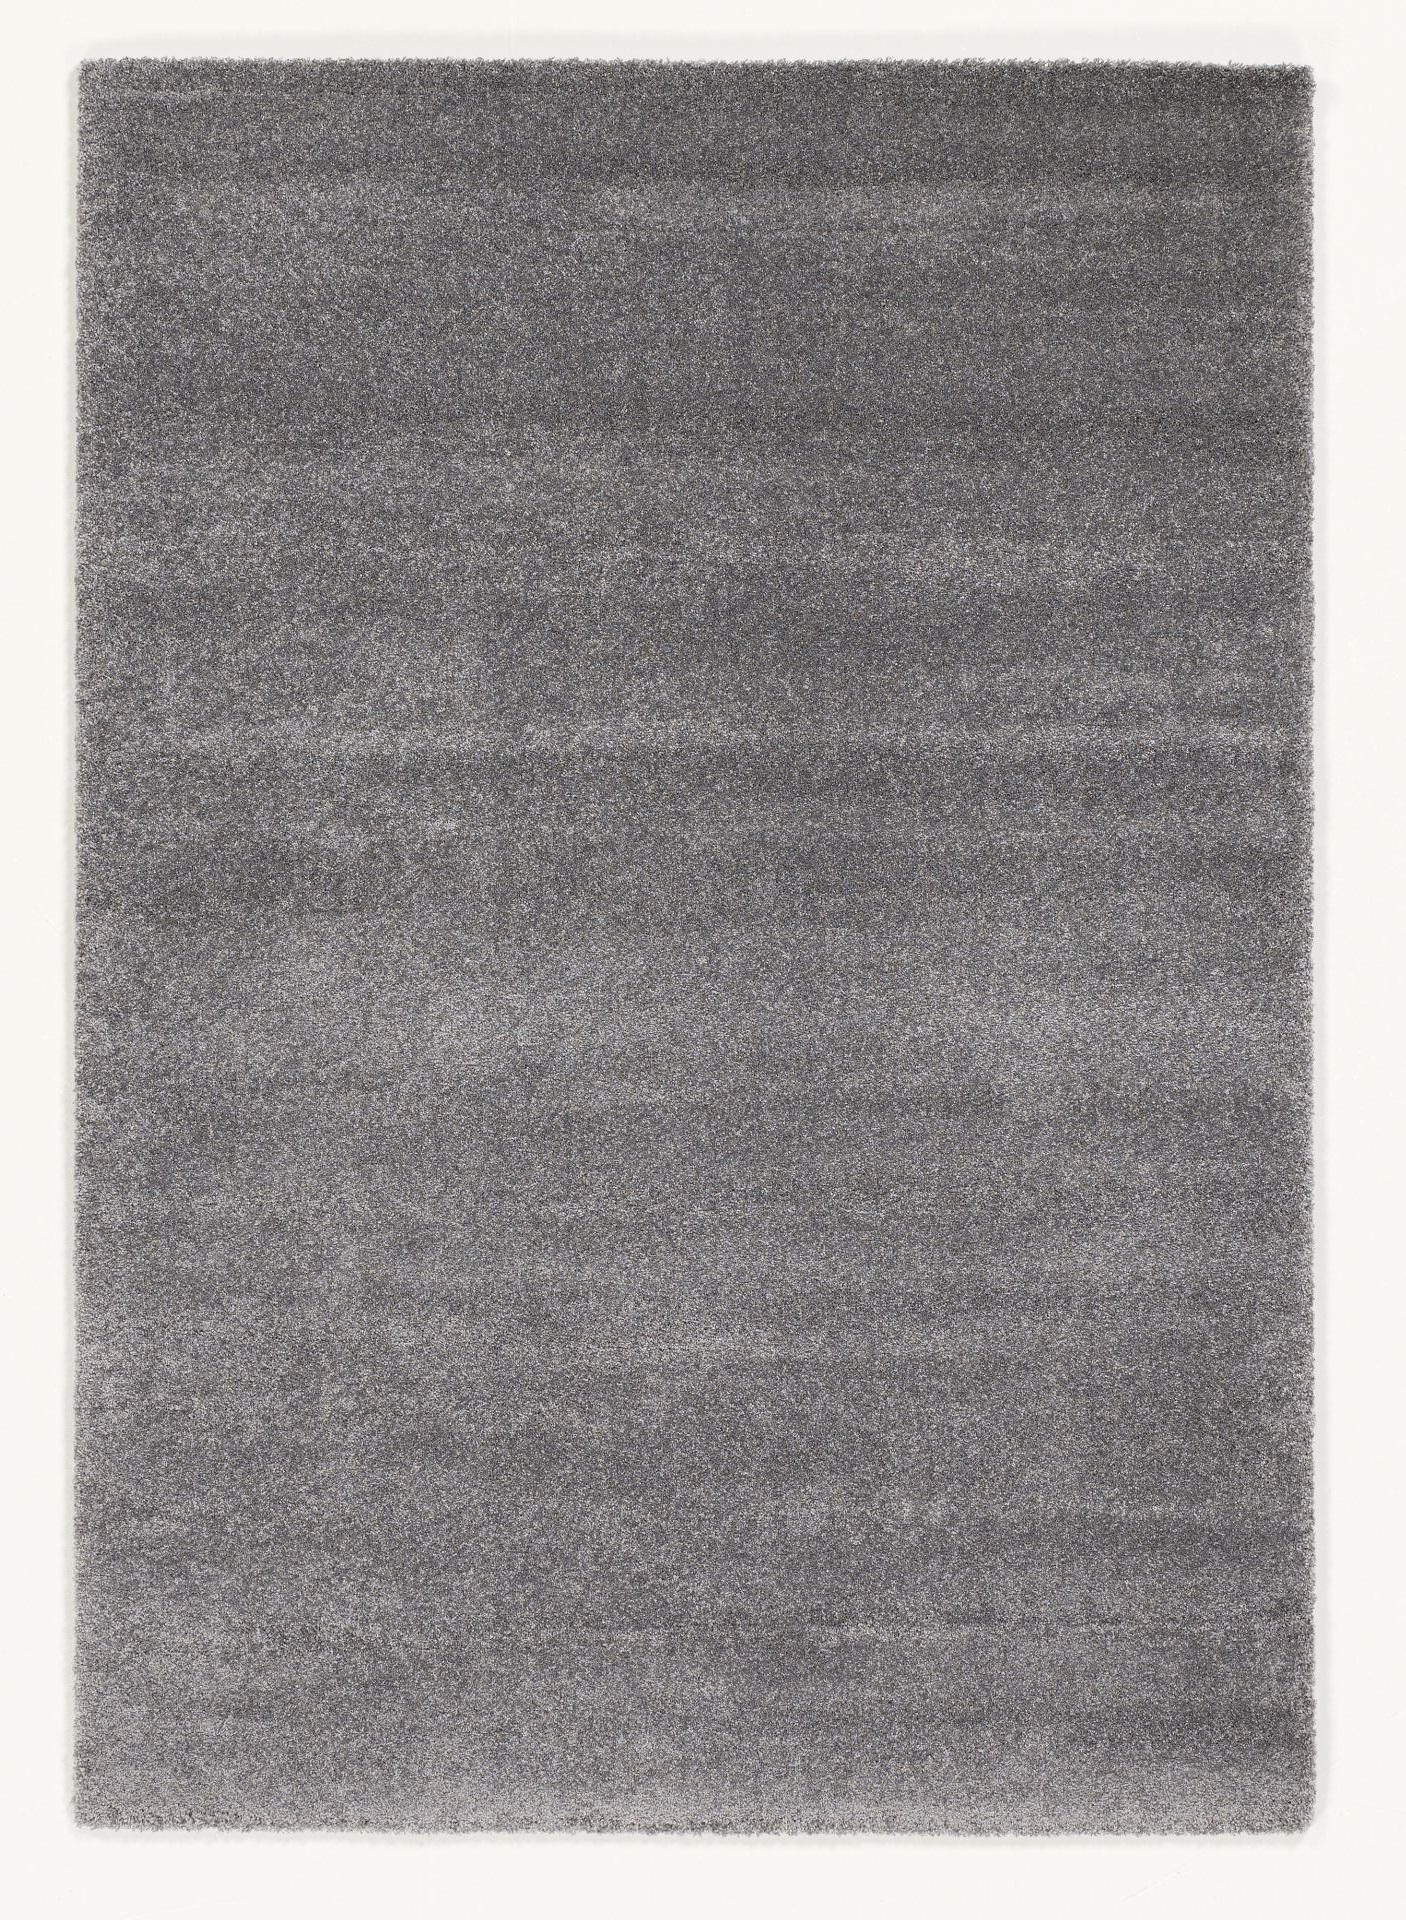 HOCHFLORTEPPICH 160/230 cm Bellevue  - Grau, Basics, Textil (160/230cm) - Novel